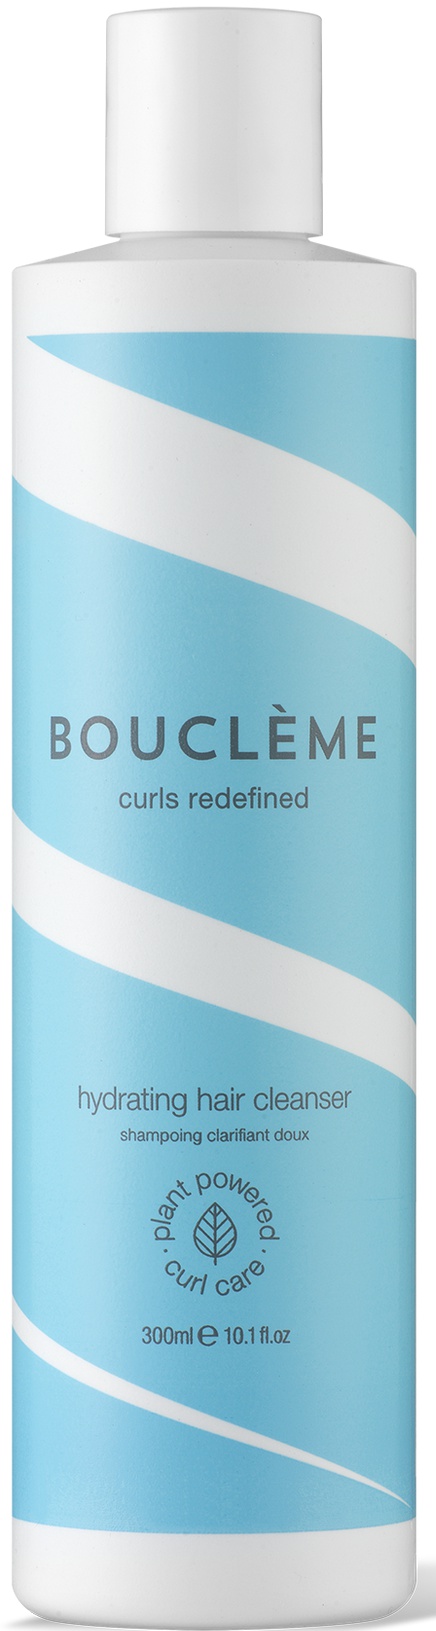 Boucléme Hydrating Hair Cleanser